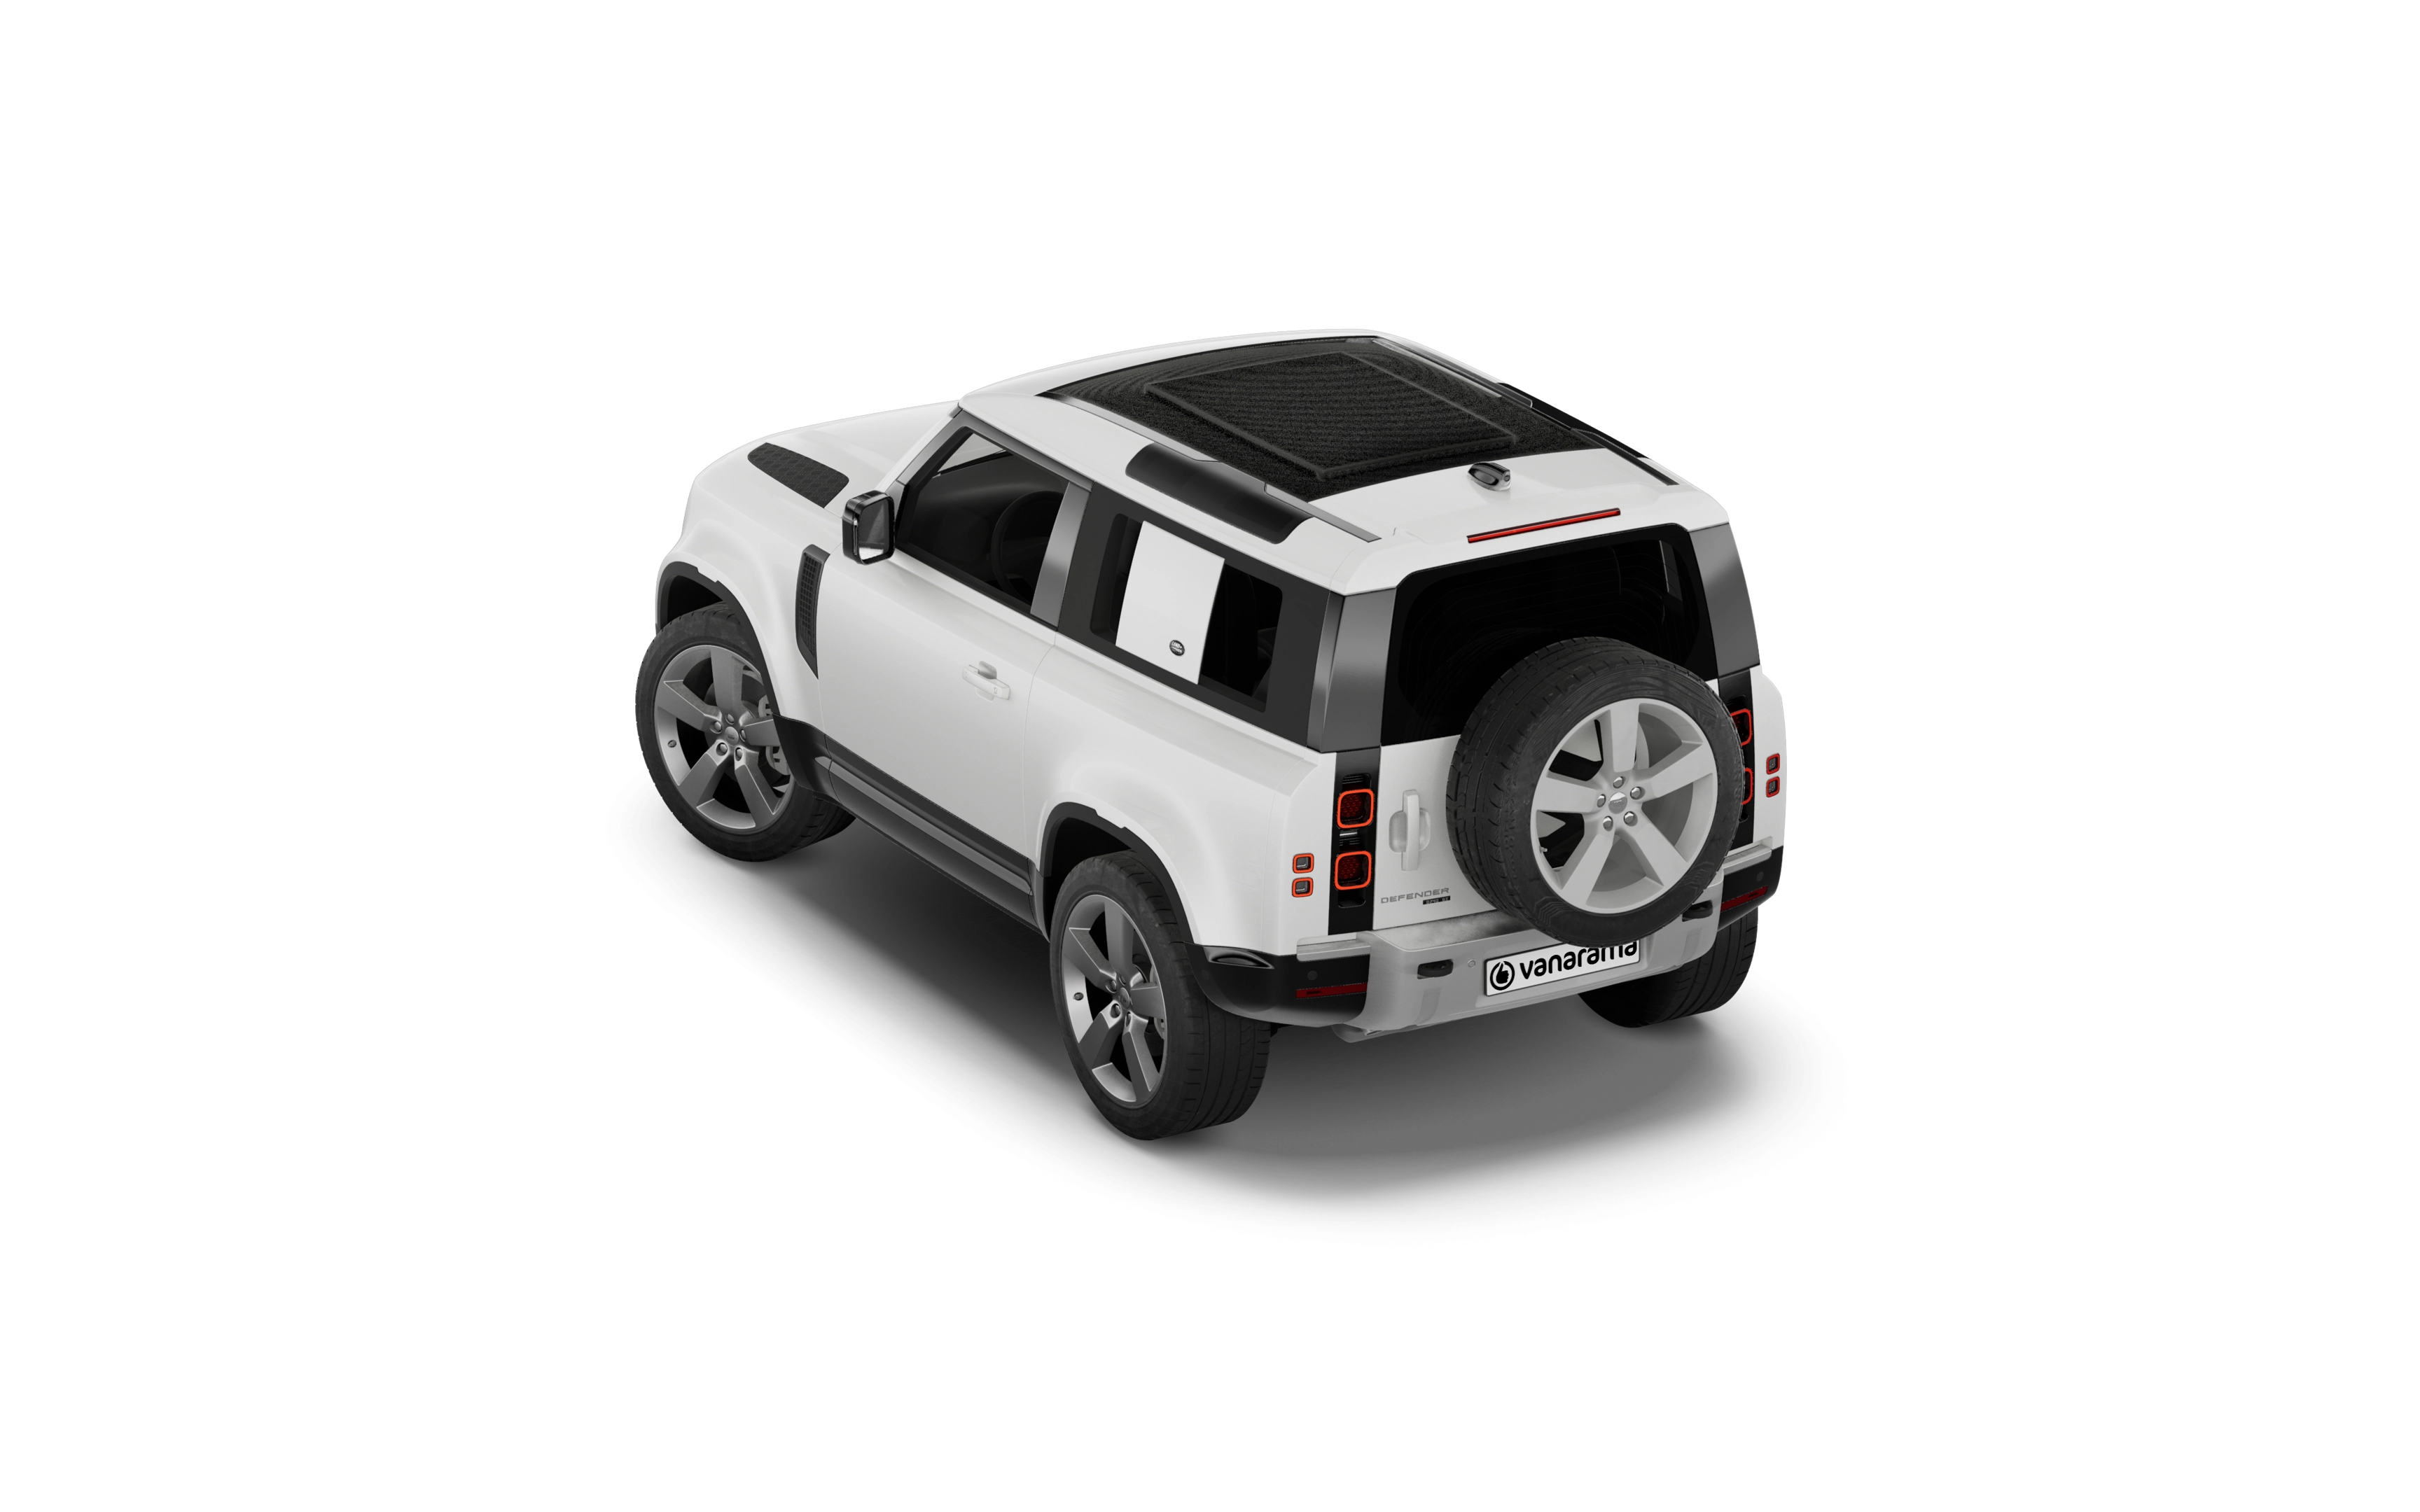 Land rover defender estate 3.0 p300 x-dynamic hse 130 5 doors auto [8 seat]